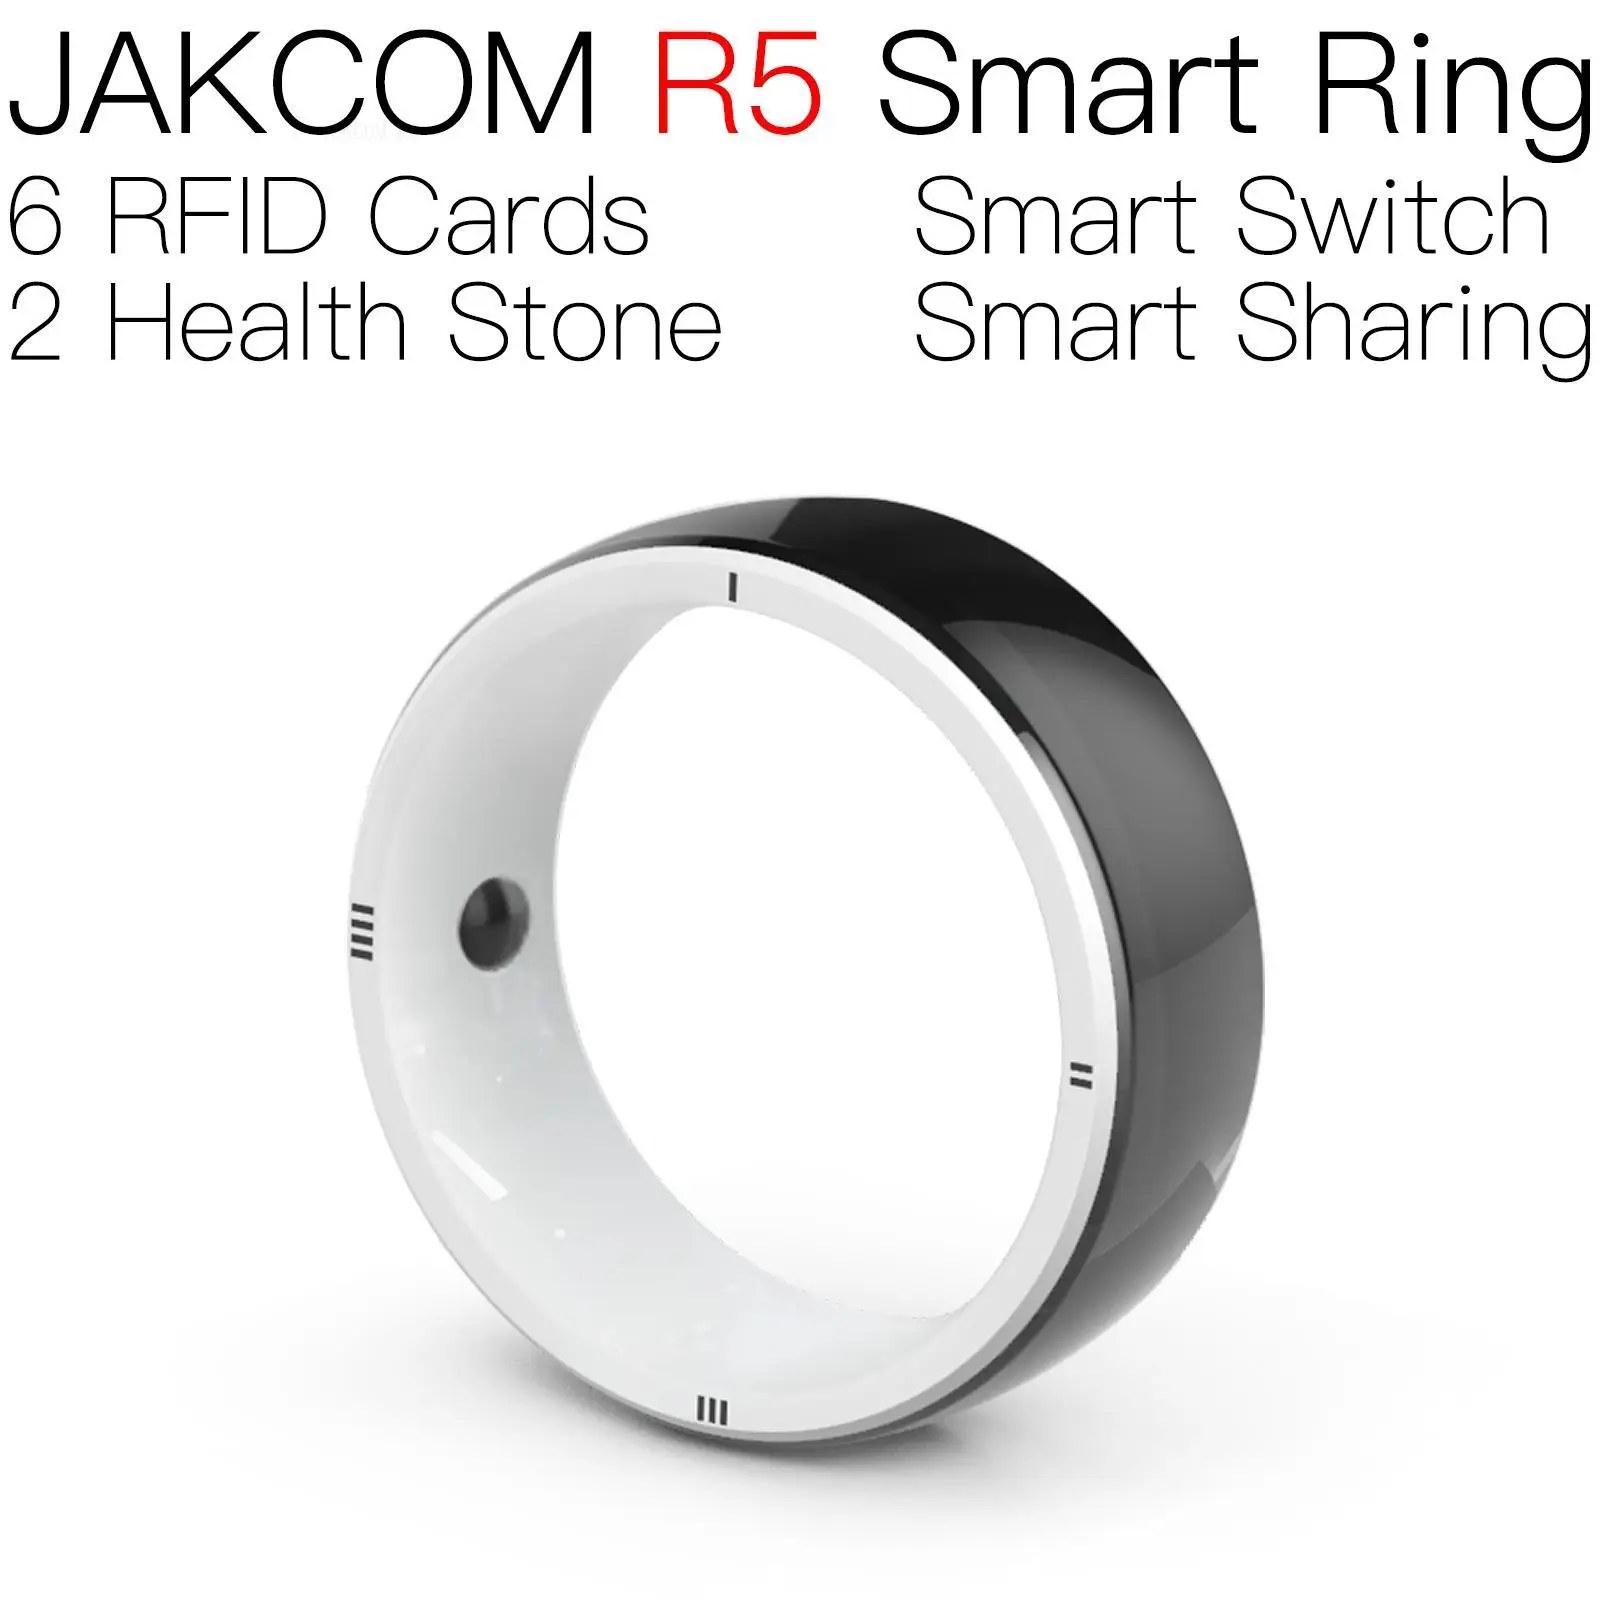 

JAKCOM R5 Smart Ring For men women ch 125 nfc maxx mhz rfid tag 125khz rewritable card credit mobile met chip smart id ring